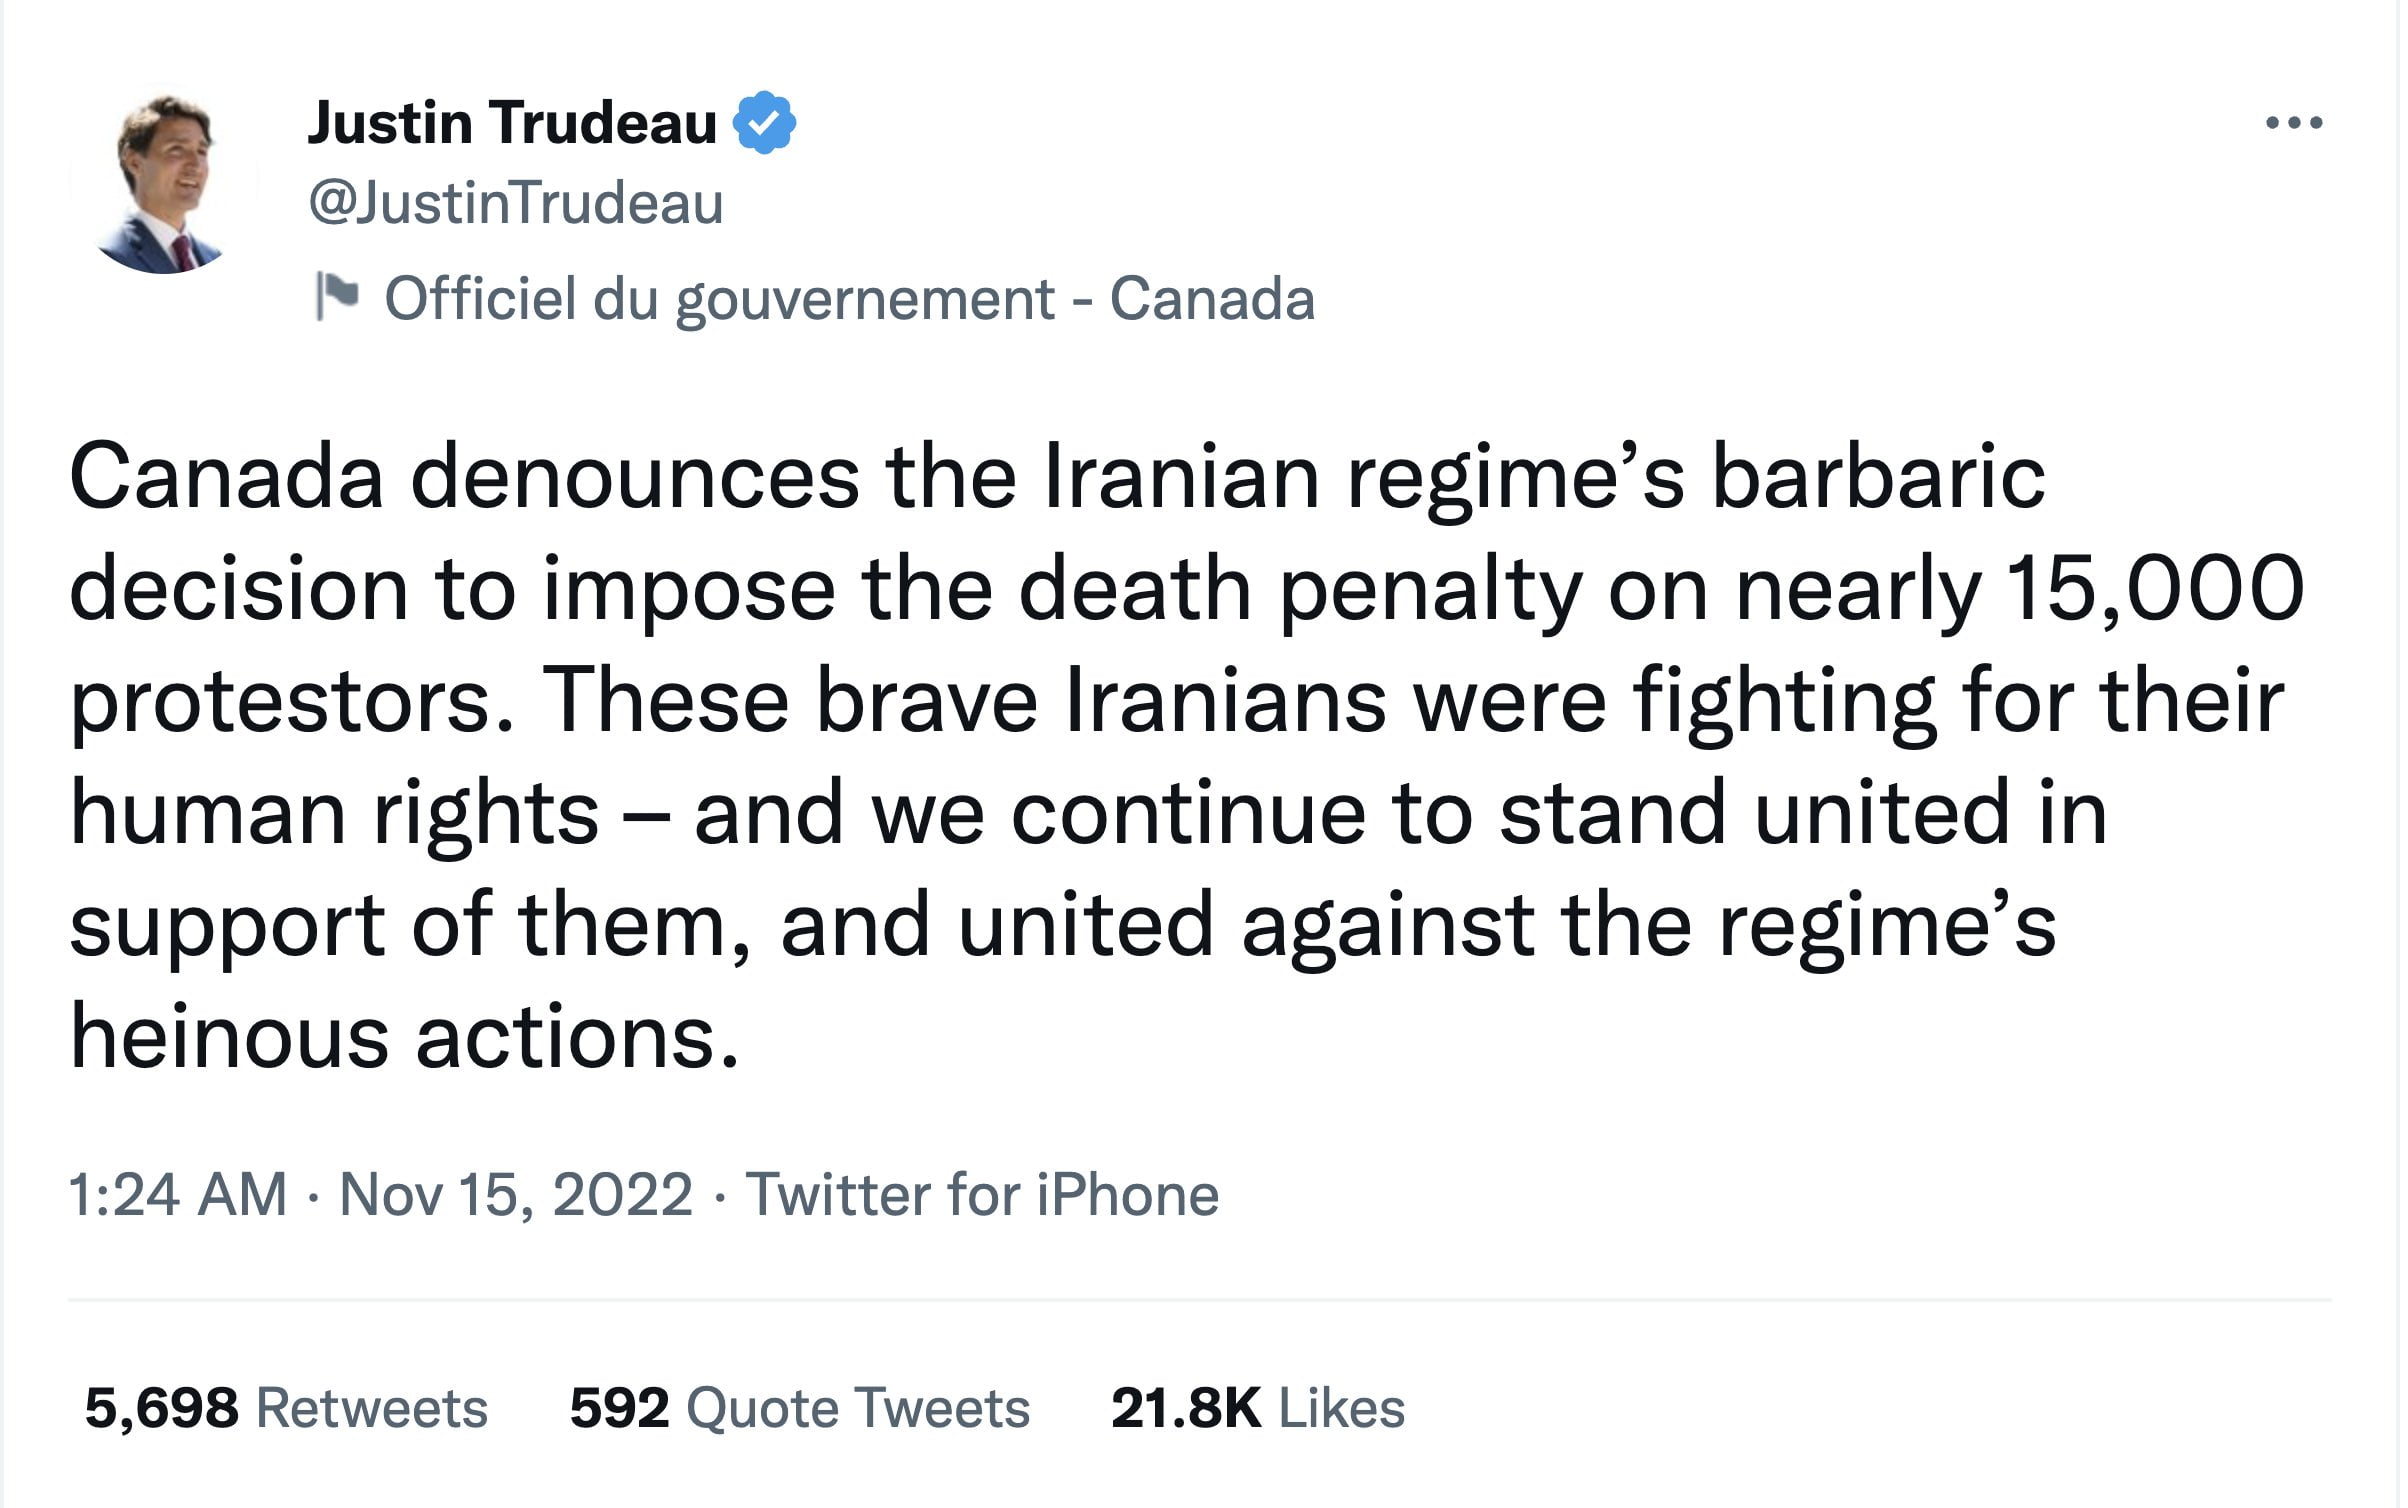 Justin Trudeau about Iran